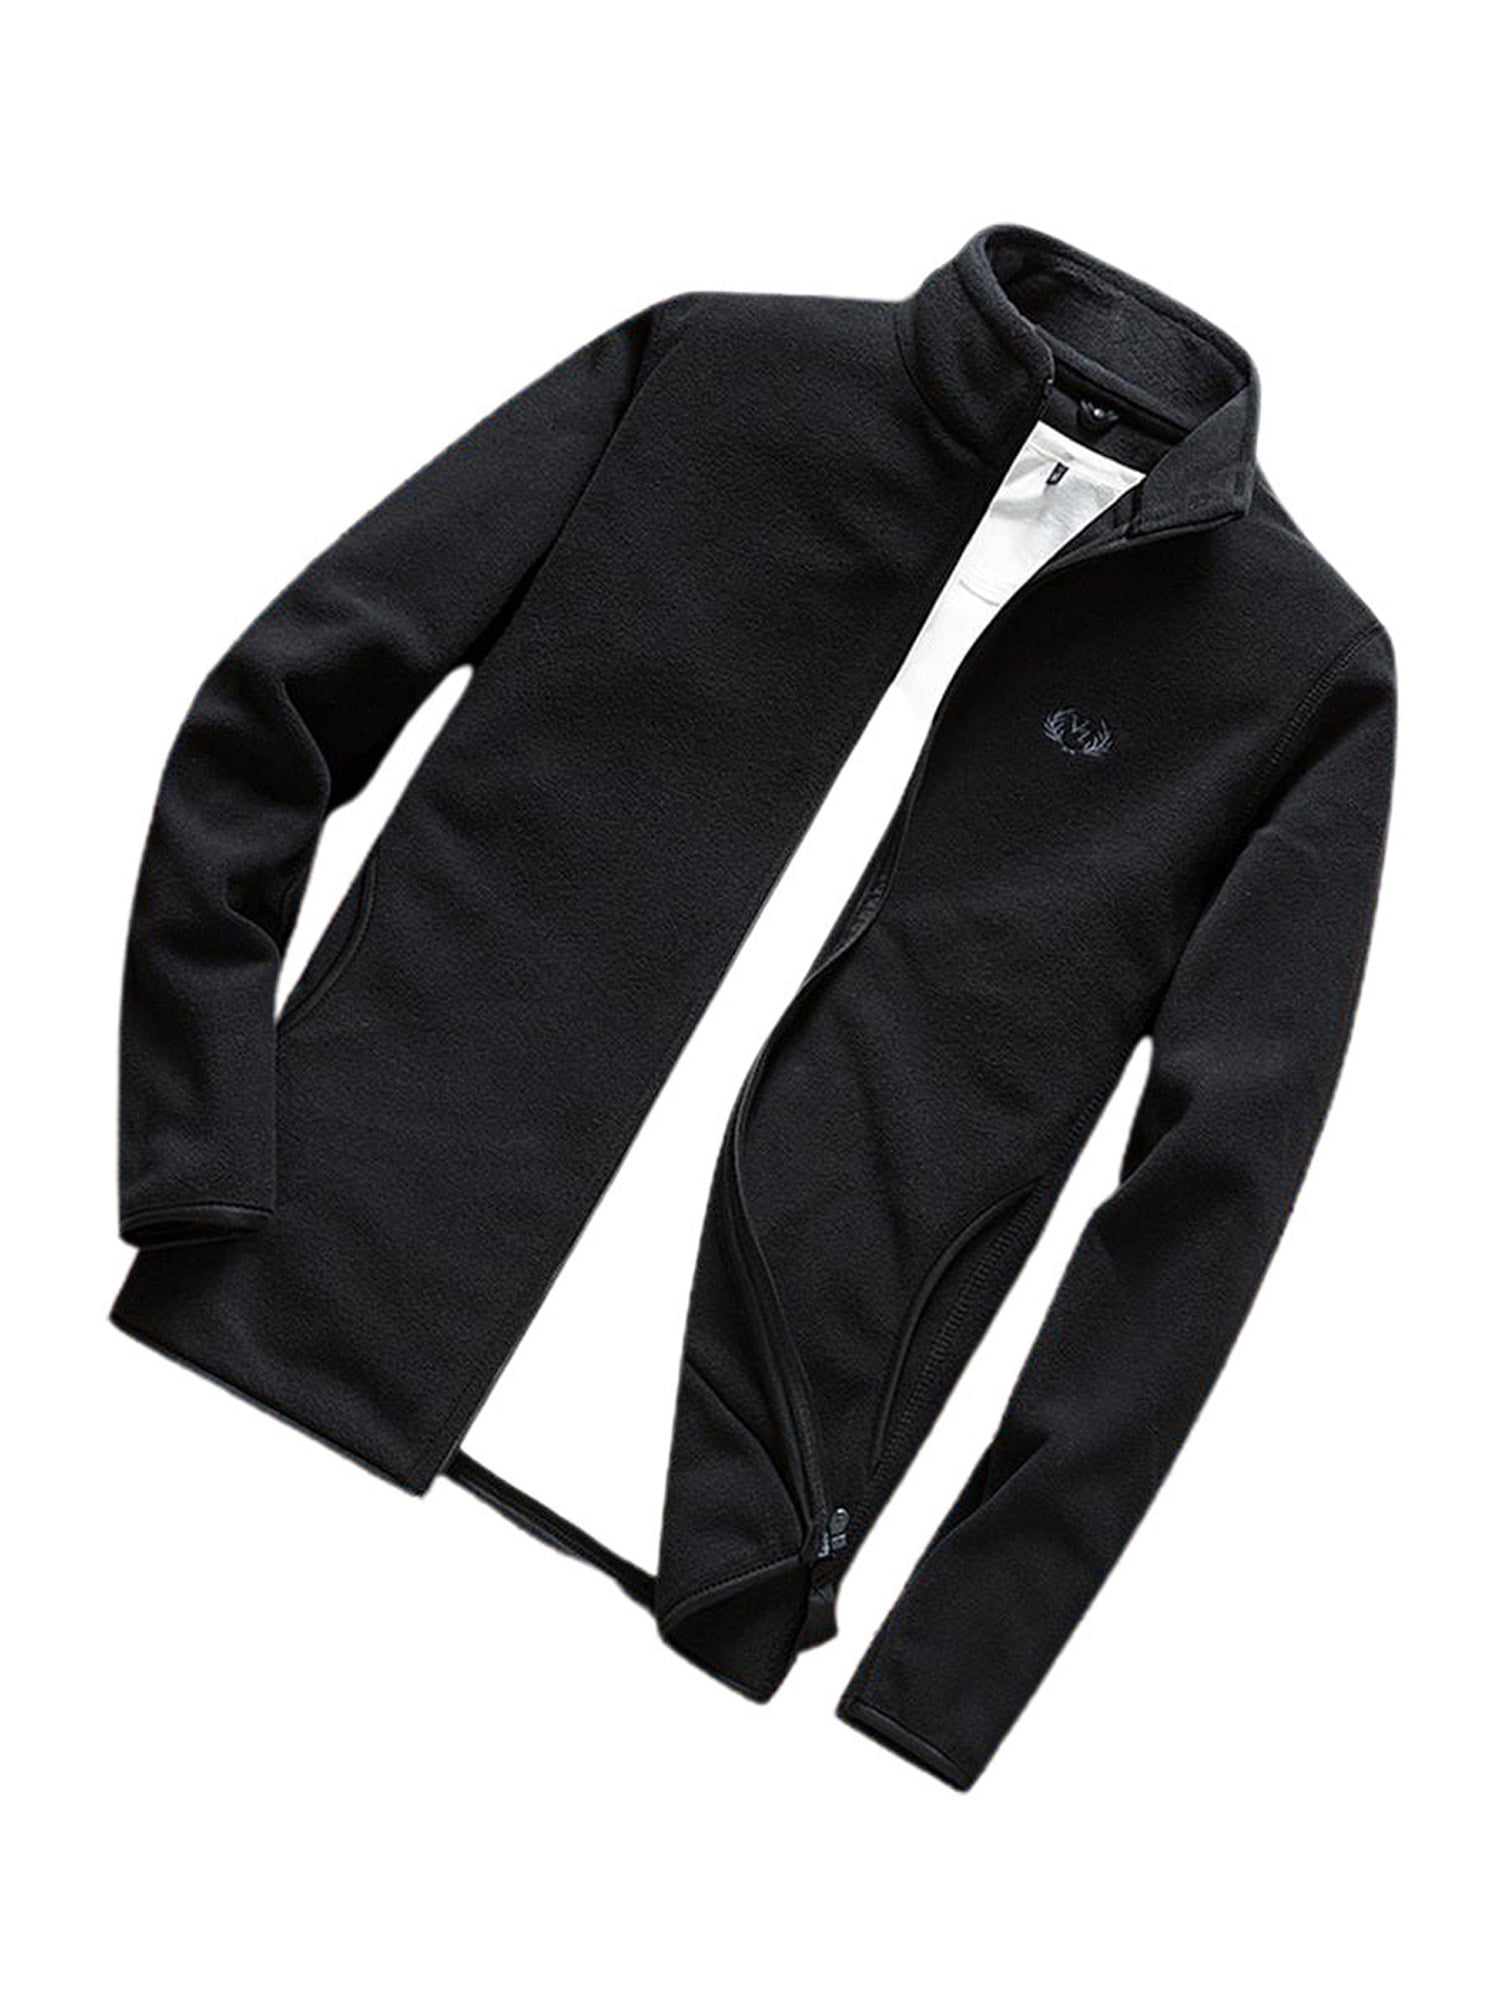 Casual Coat Zipper Outwear Long Sleeve Men New Baseball Slim Fit Jacket Overcoat